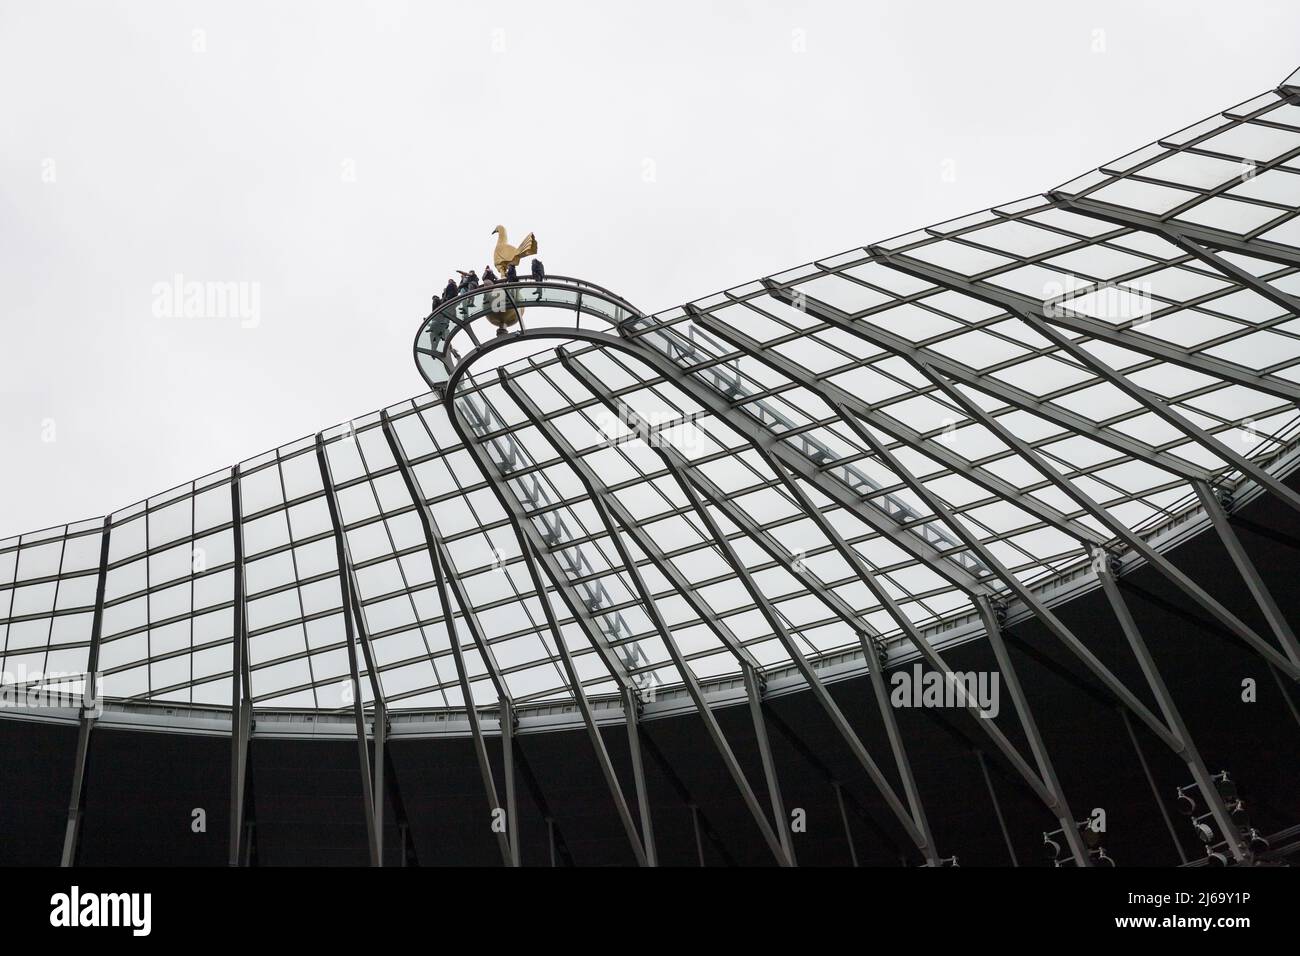 Visitors near the cockerel statue on the roof of the Tottenham Hotspur football stadium Stock Photo